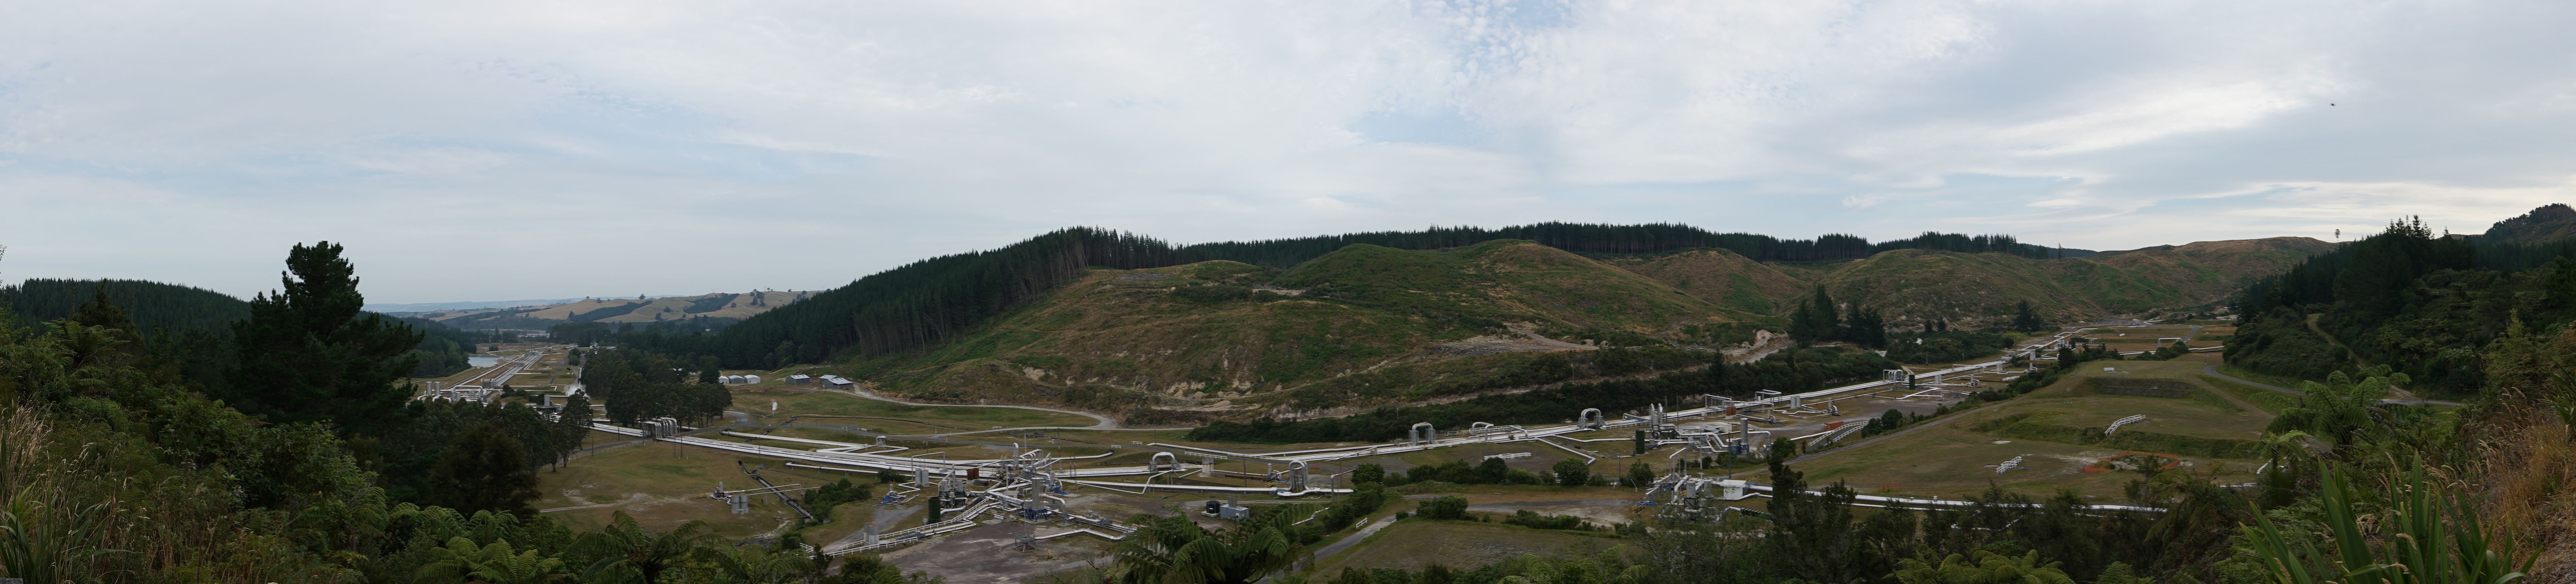 Panorama: Wairakei Geothermal Station